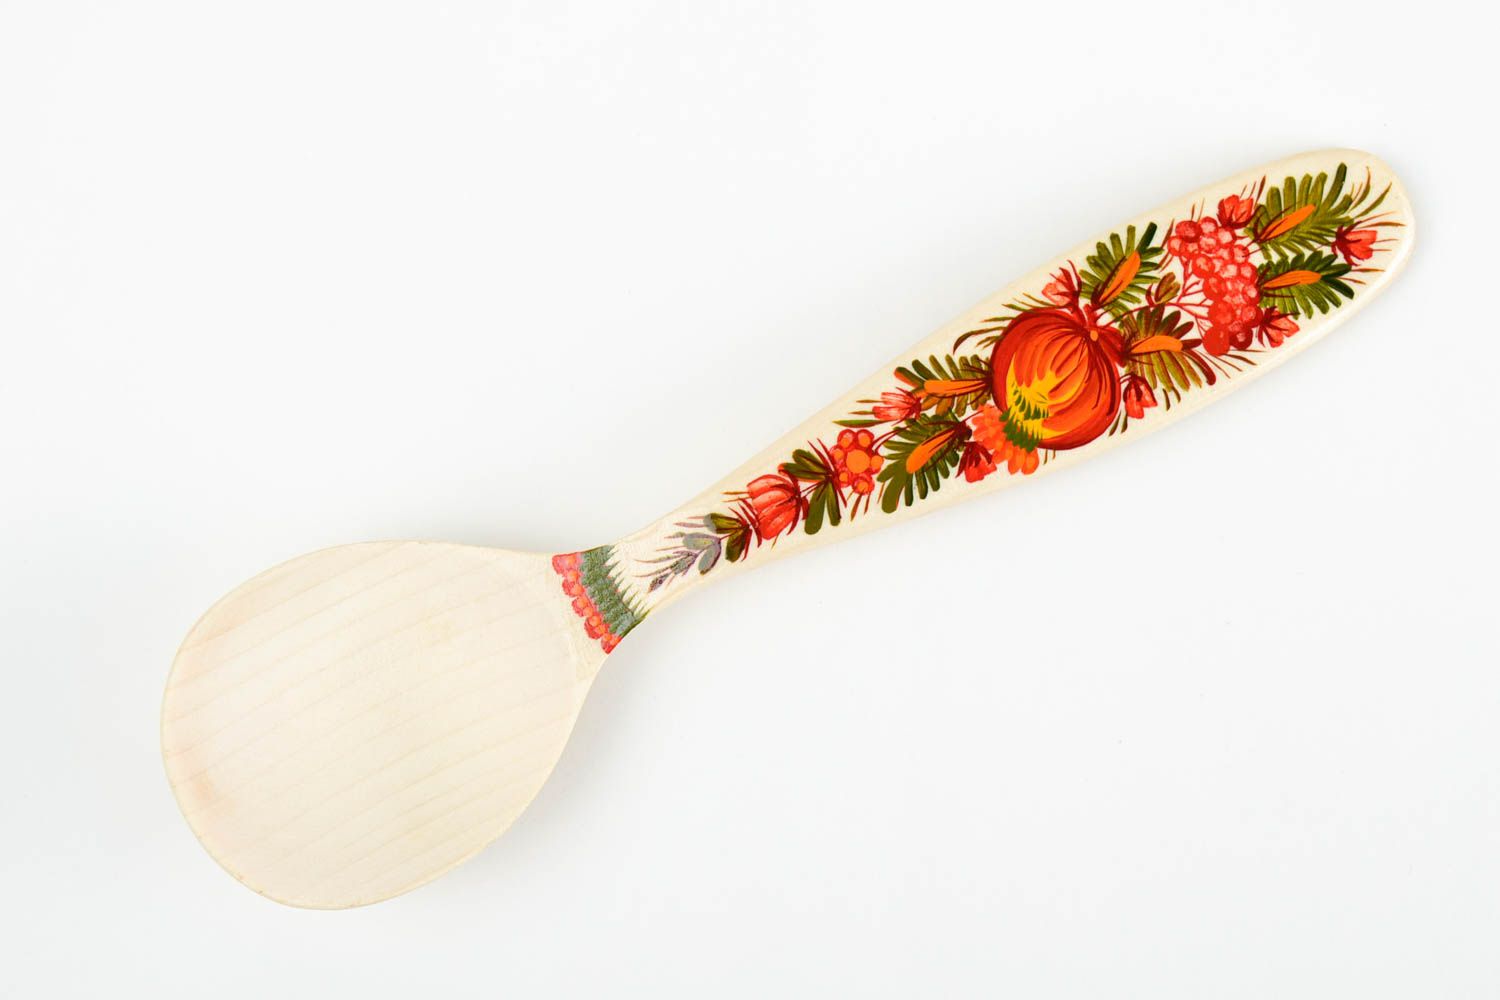 Cuchara de madera pintada a mano utensilio de cocina artesanal regalo original foto 3